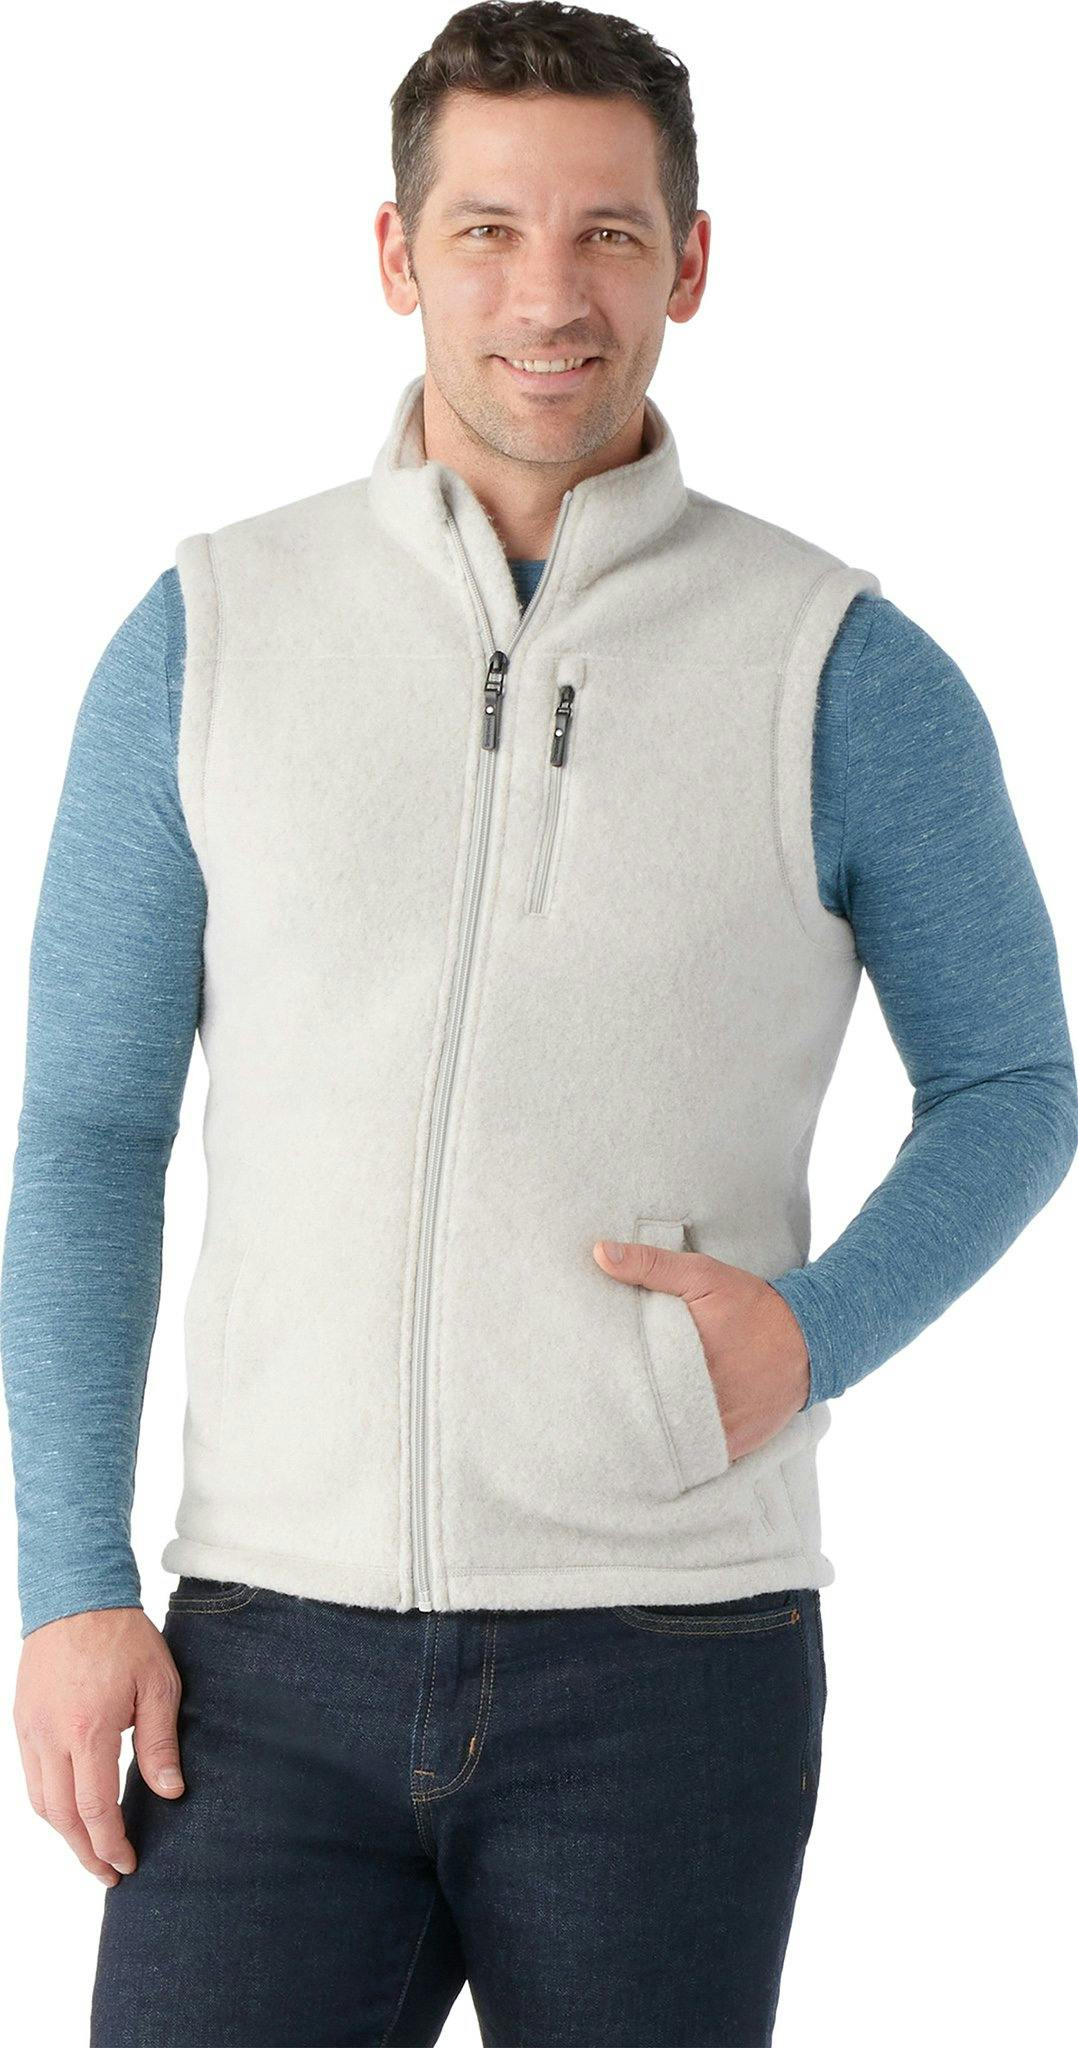 Product gallery image number 3 for product Hudson Trail Fleece Vest - Men's